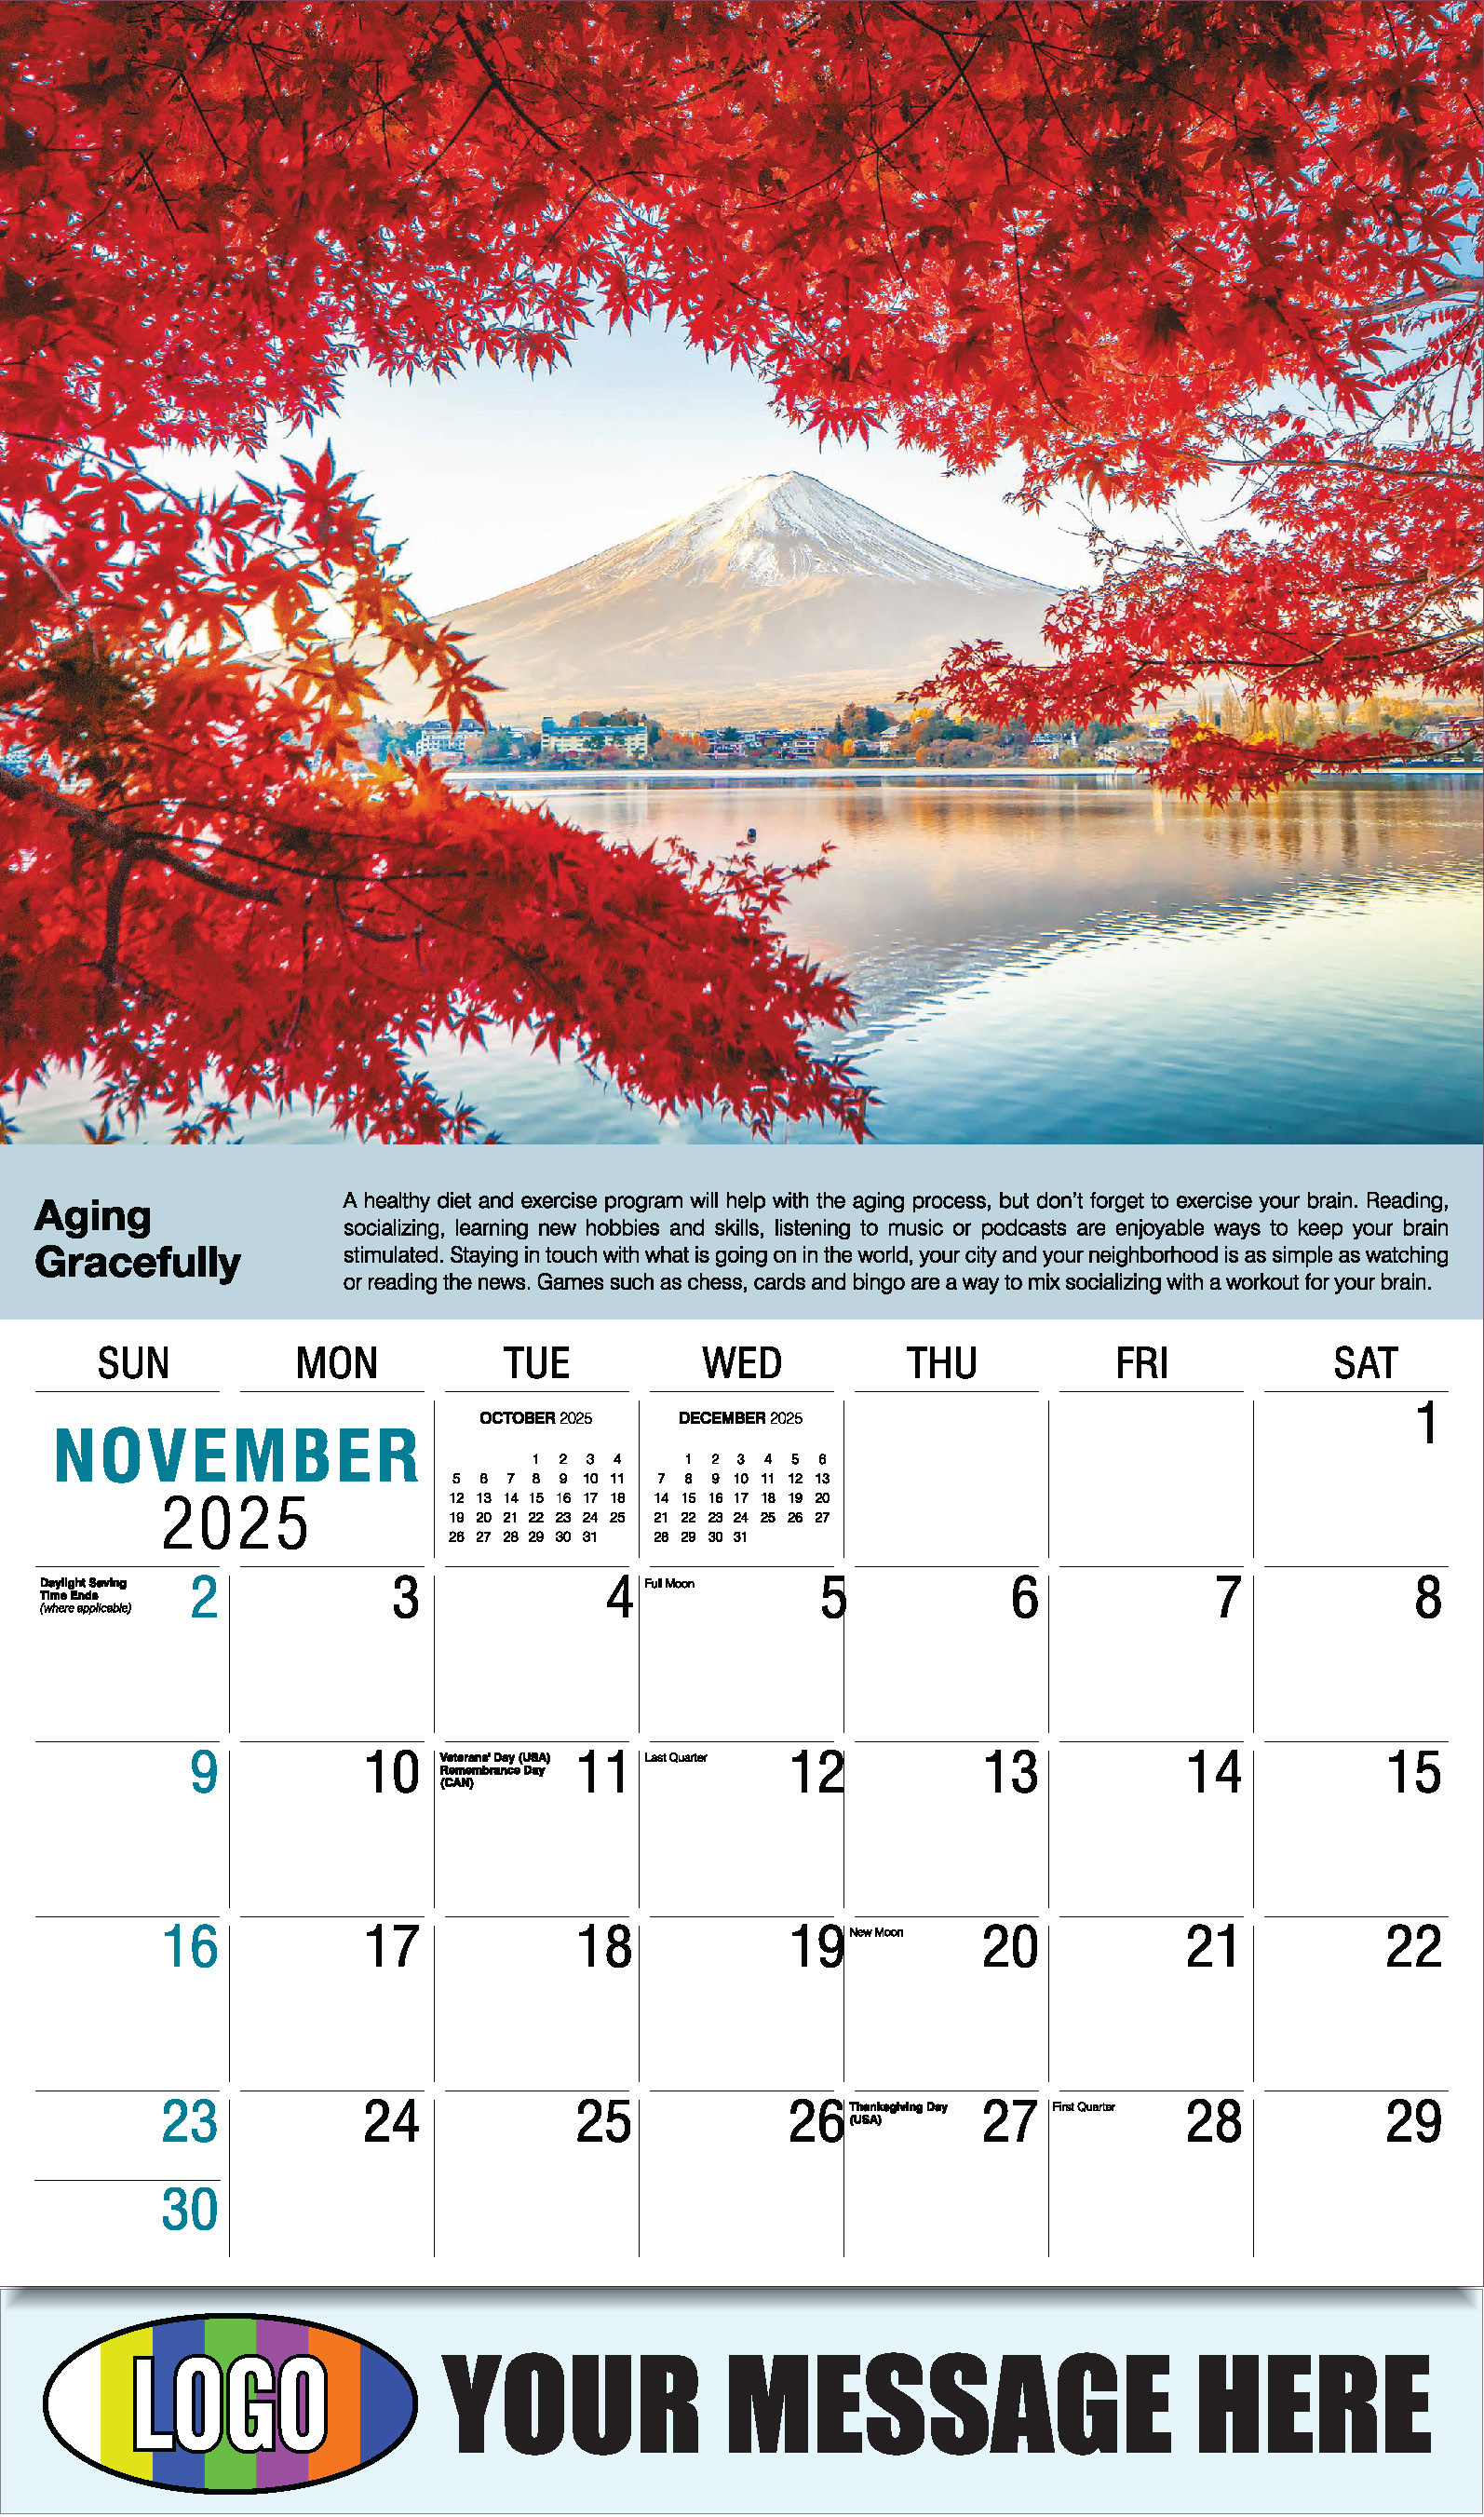 Health Tips 2025 Business Promo Wall Calendar - November